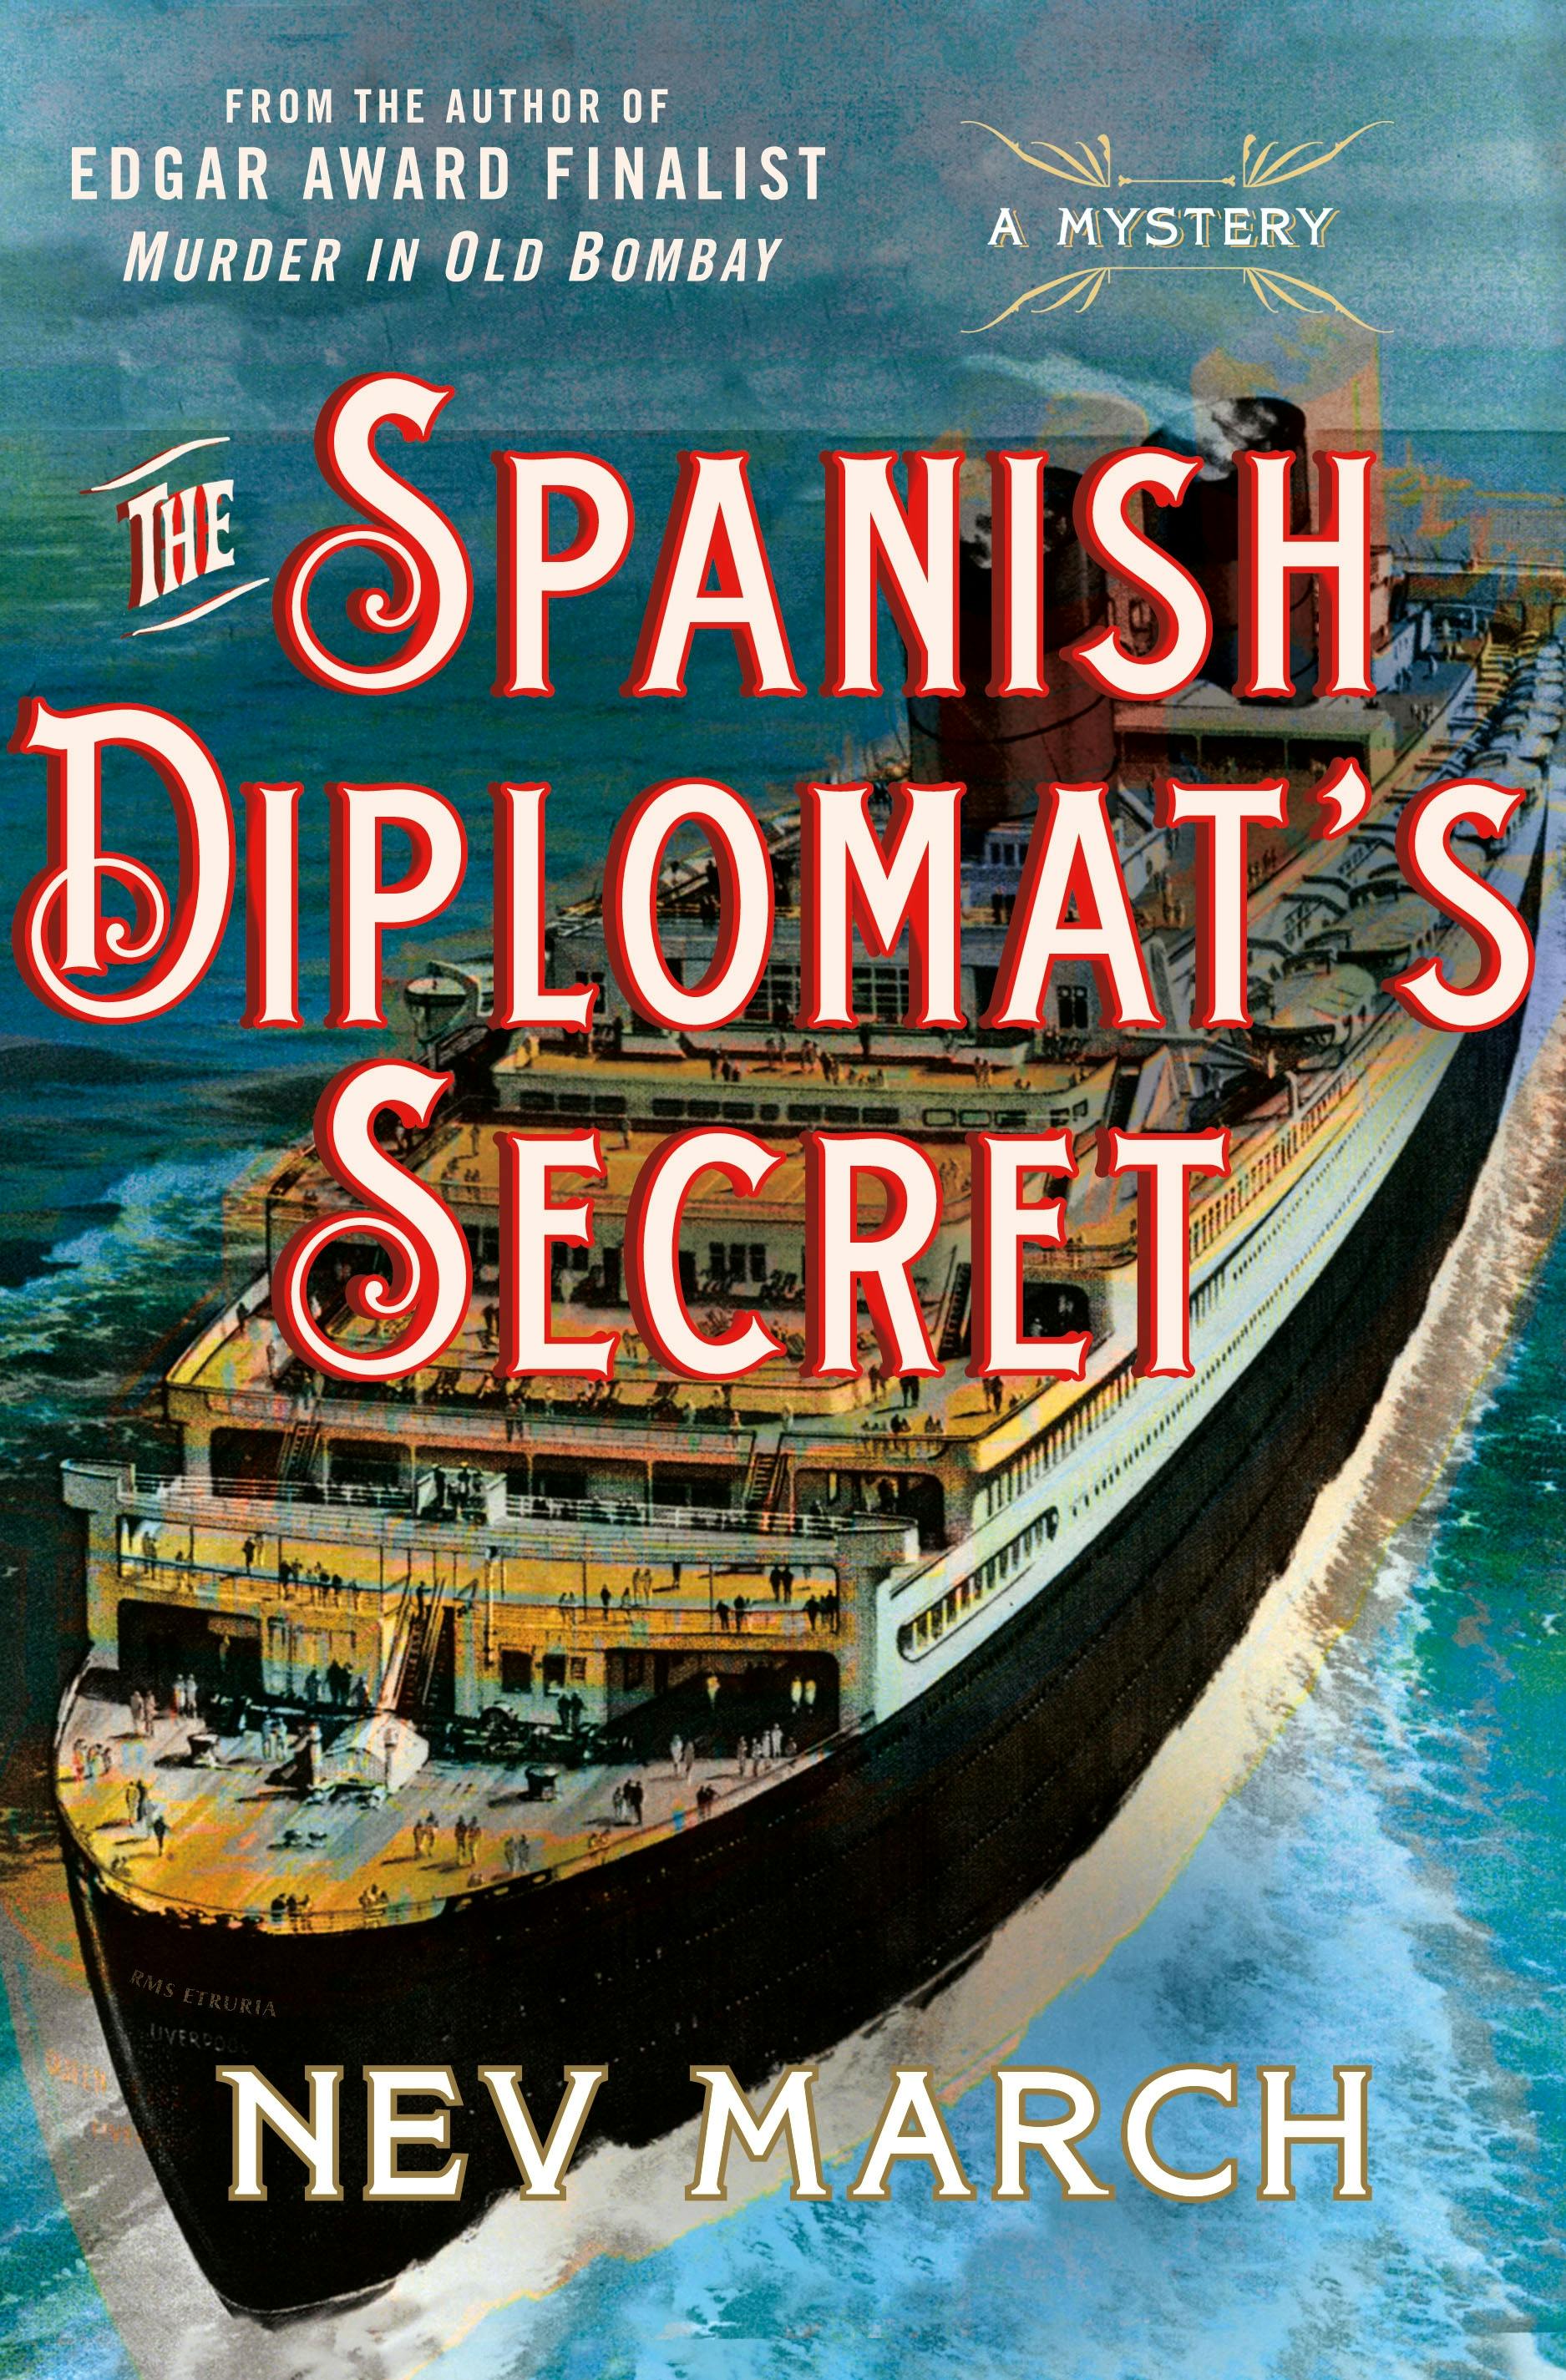 Image of The Spanish Diplomat's Secret